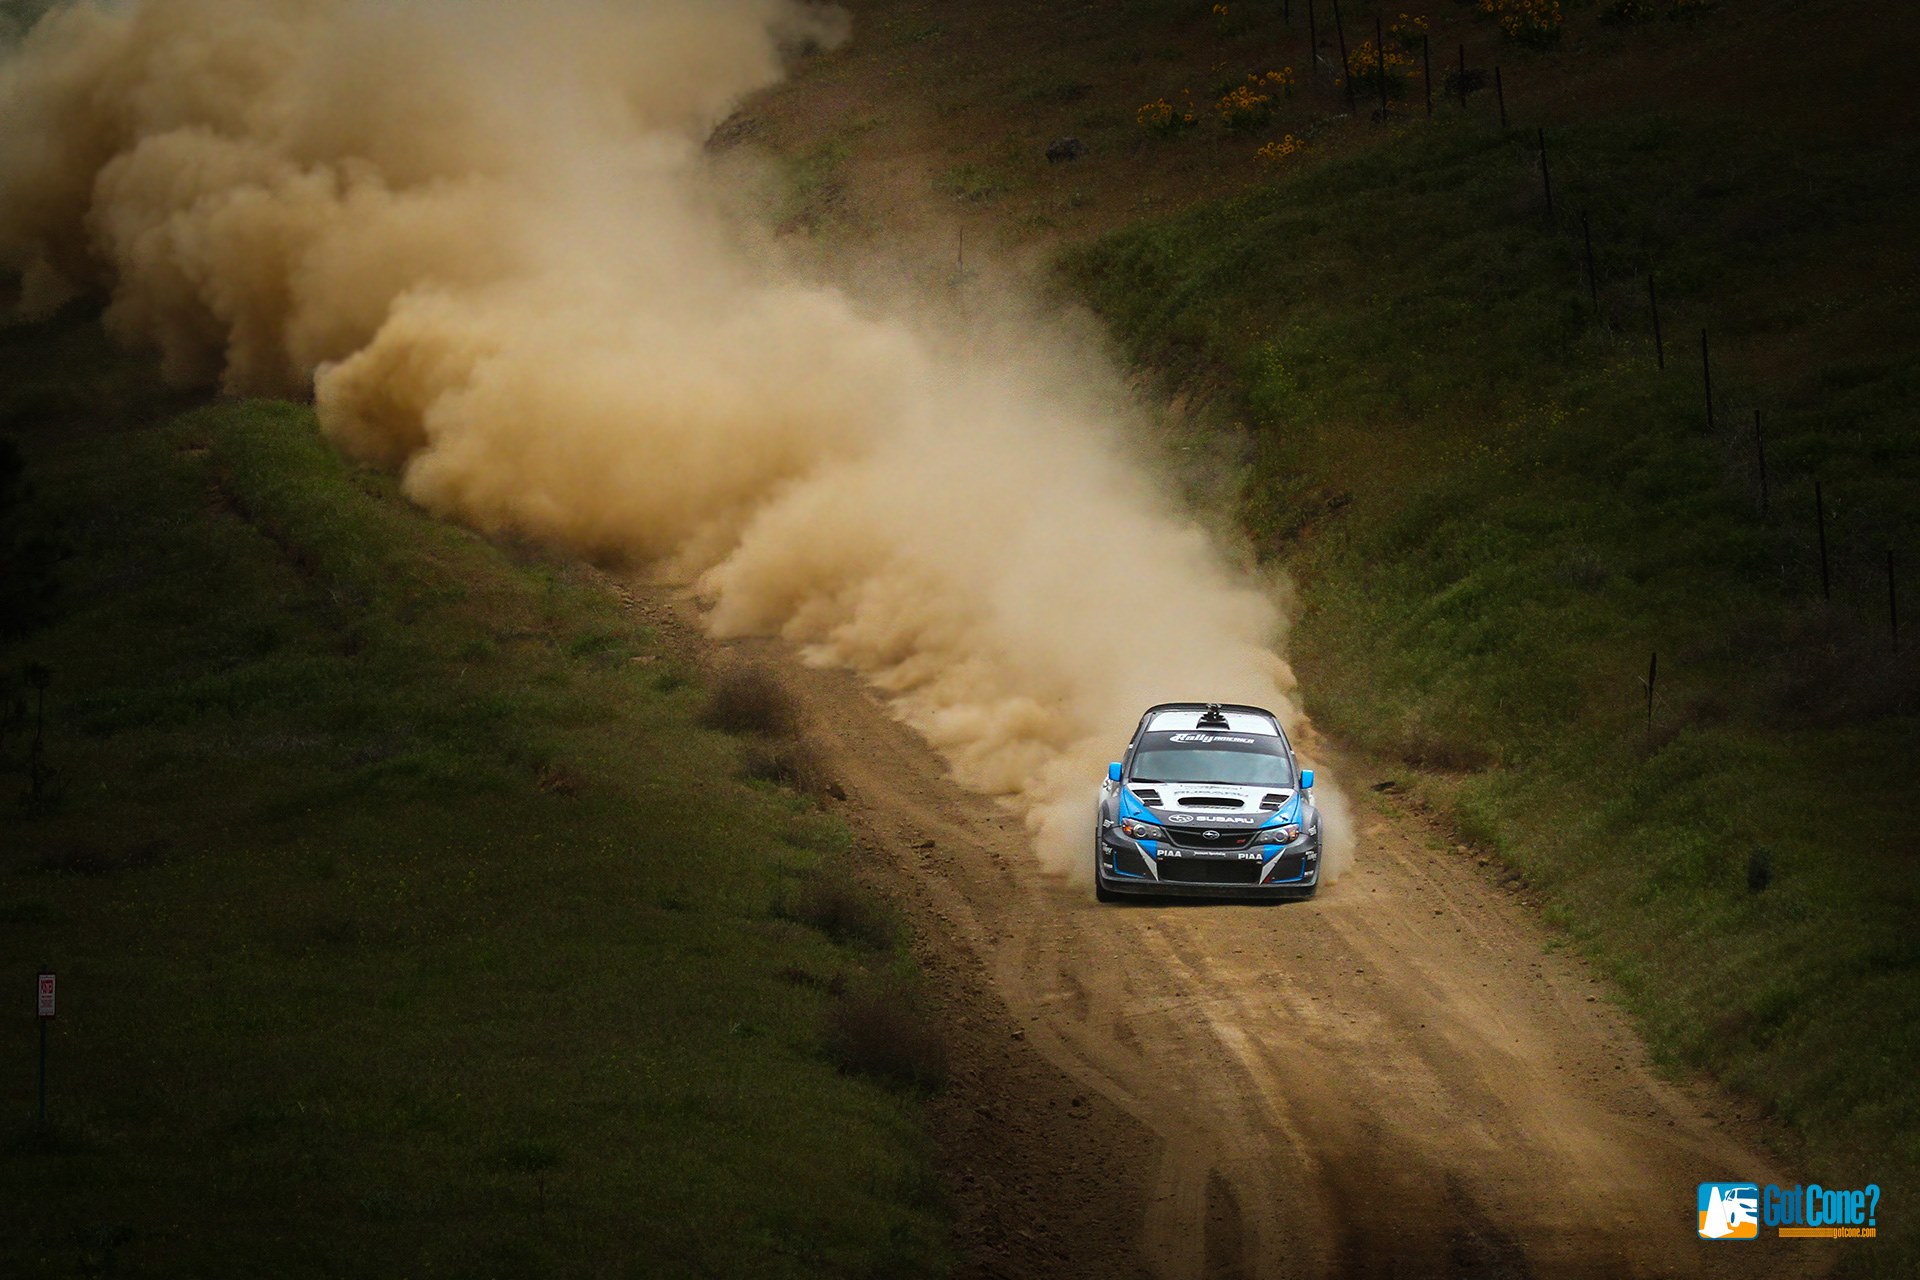 Subaru Rally Wallpapers